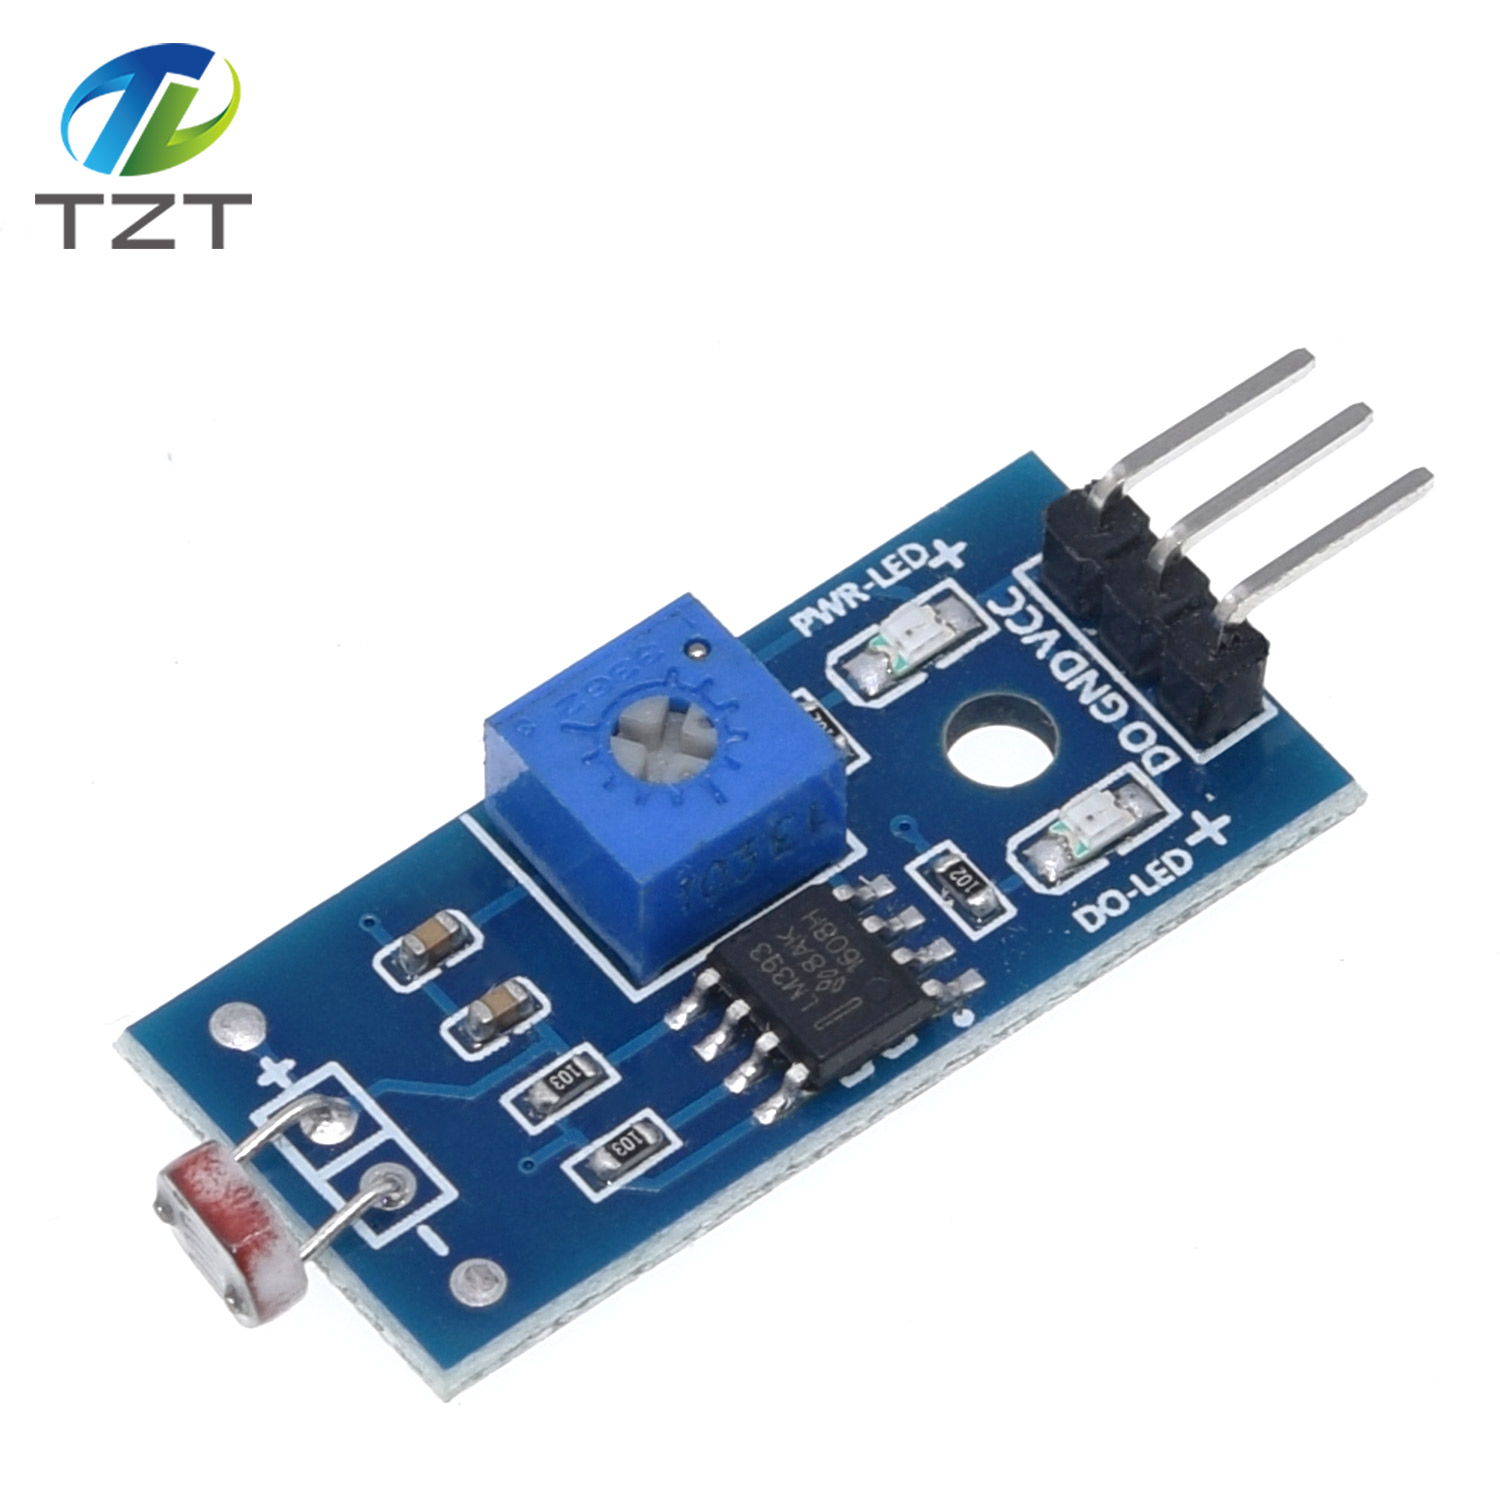 TZT Photosensitive brightness resistance sensor module Light intensity detect New For Arduino